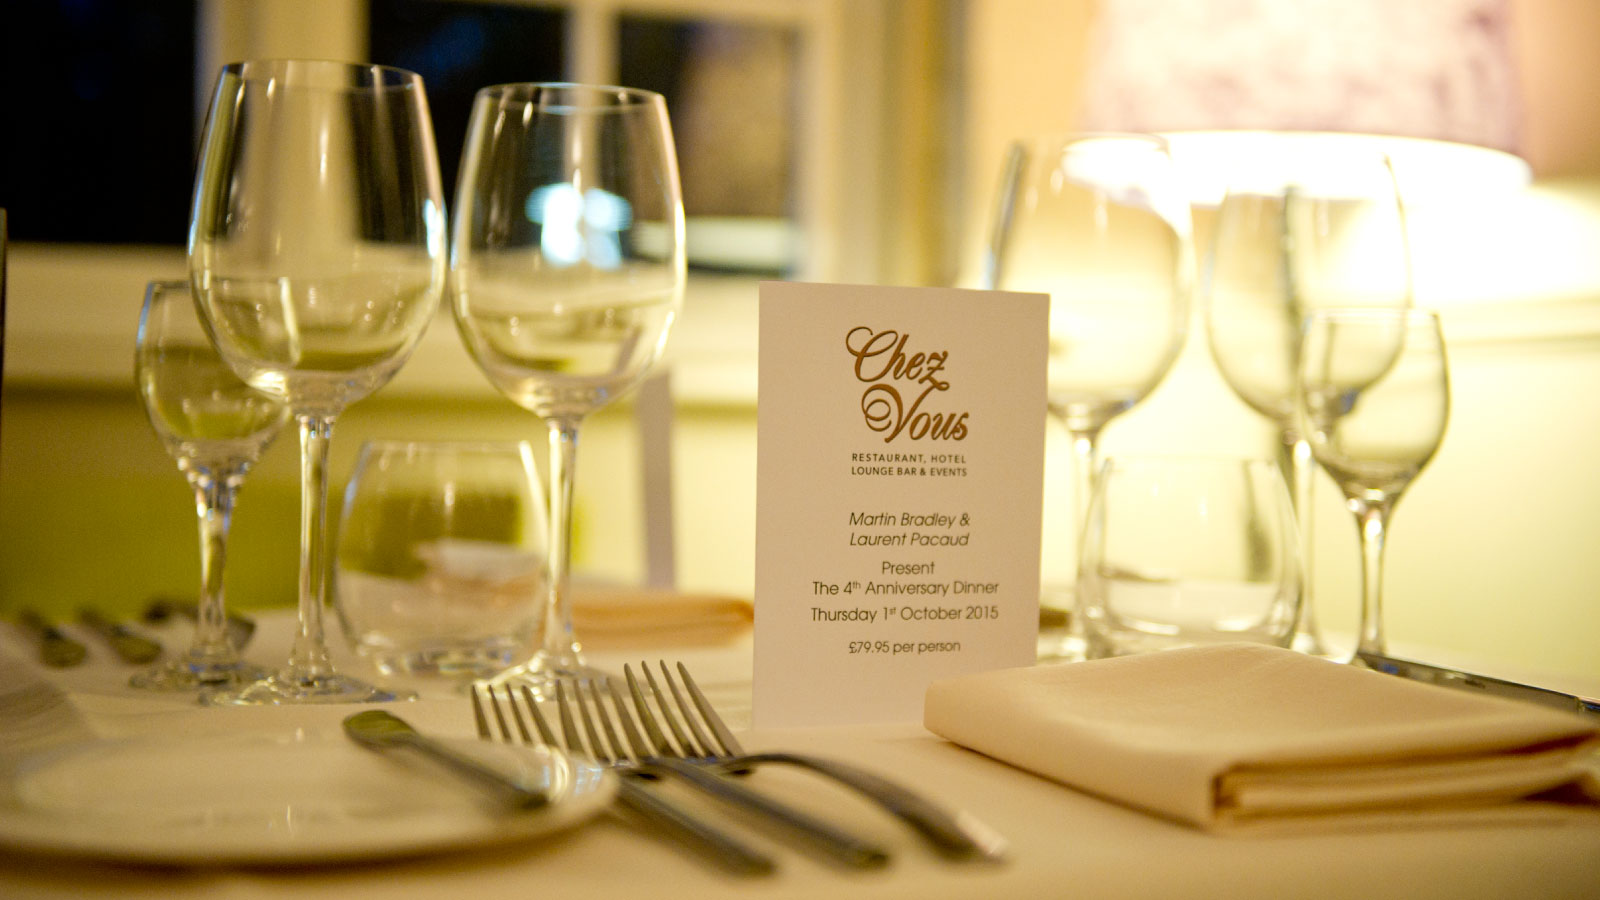 Menu design and Surrey restaurant branding for Chez Vous